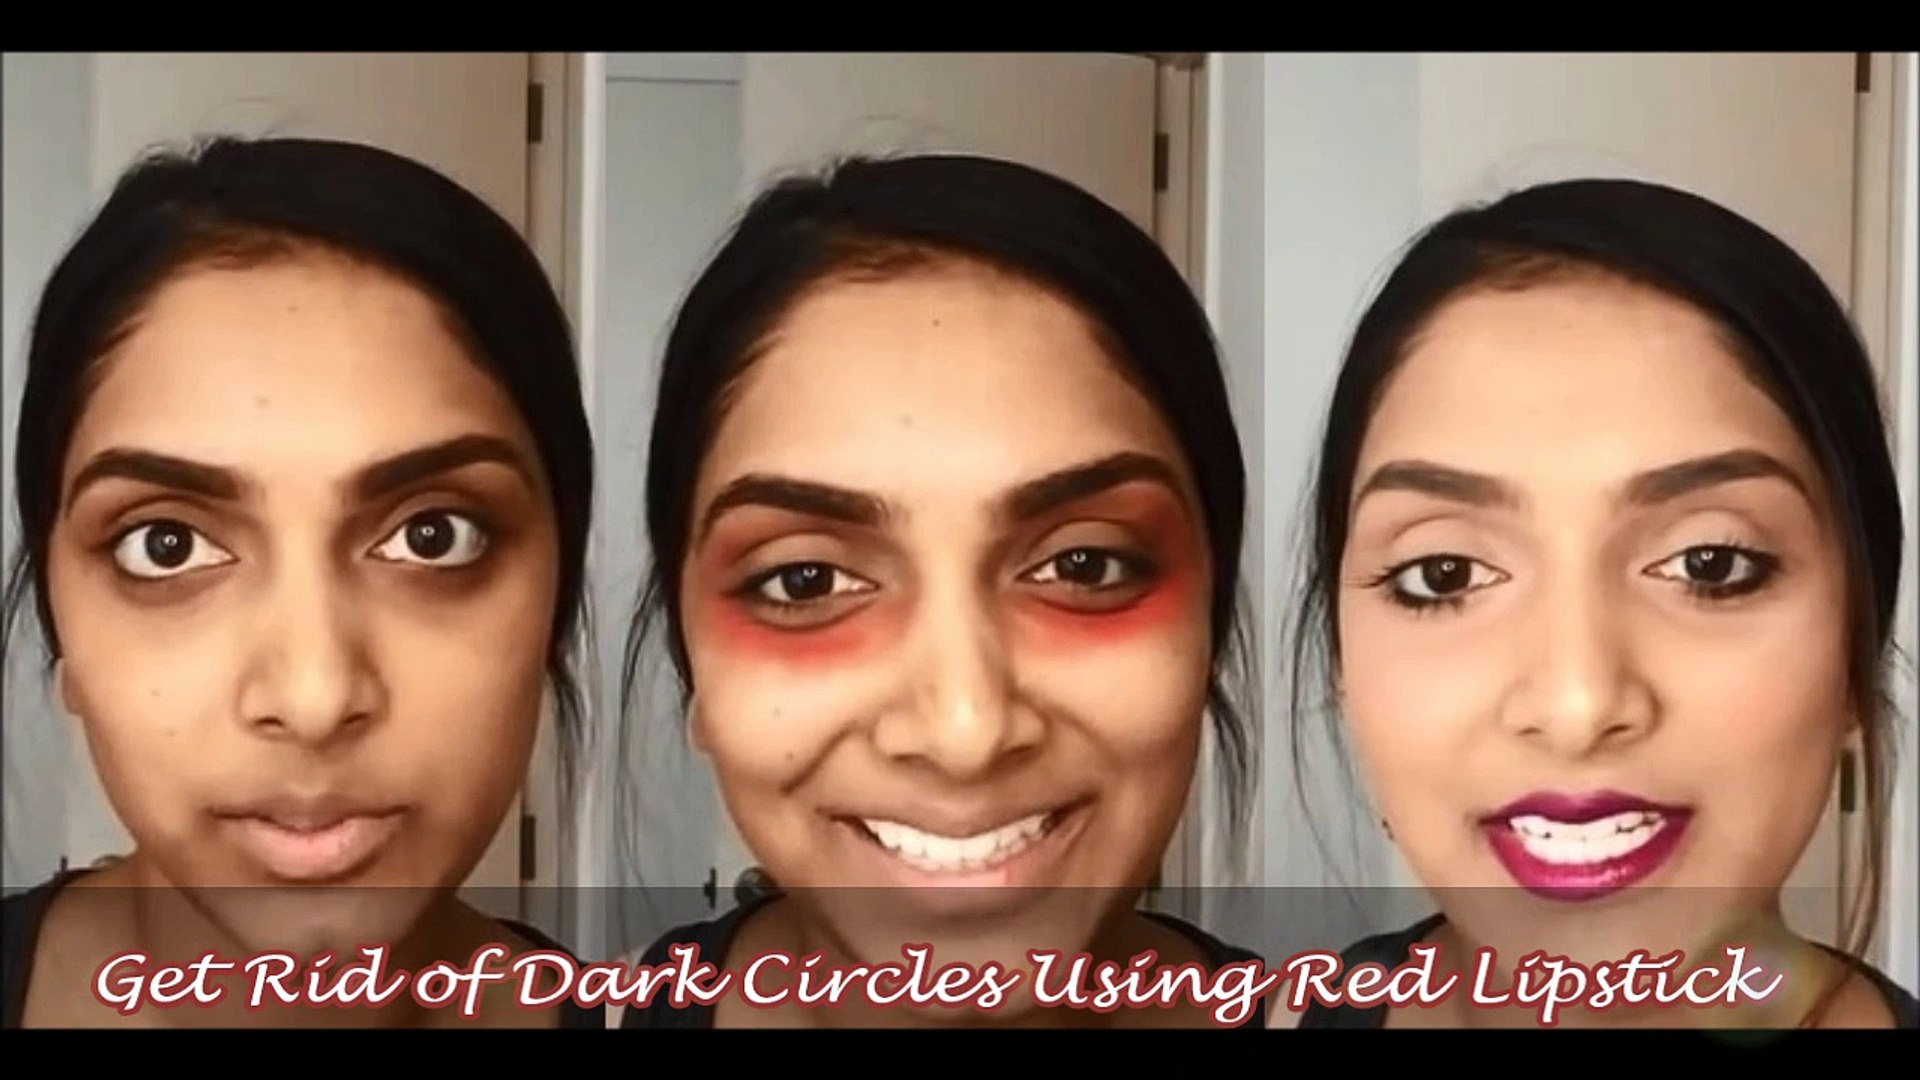 Metropolitan skive server Hide Dark Circles Using Red Lipstick by Deepicam - video Dailymotion